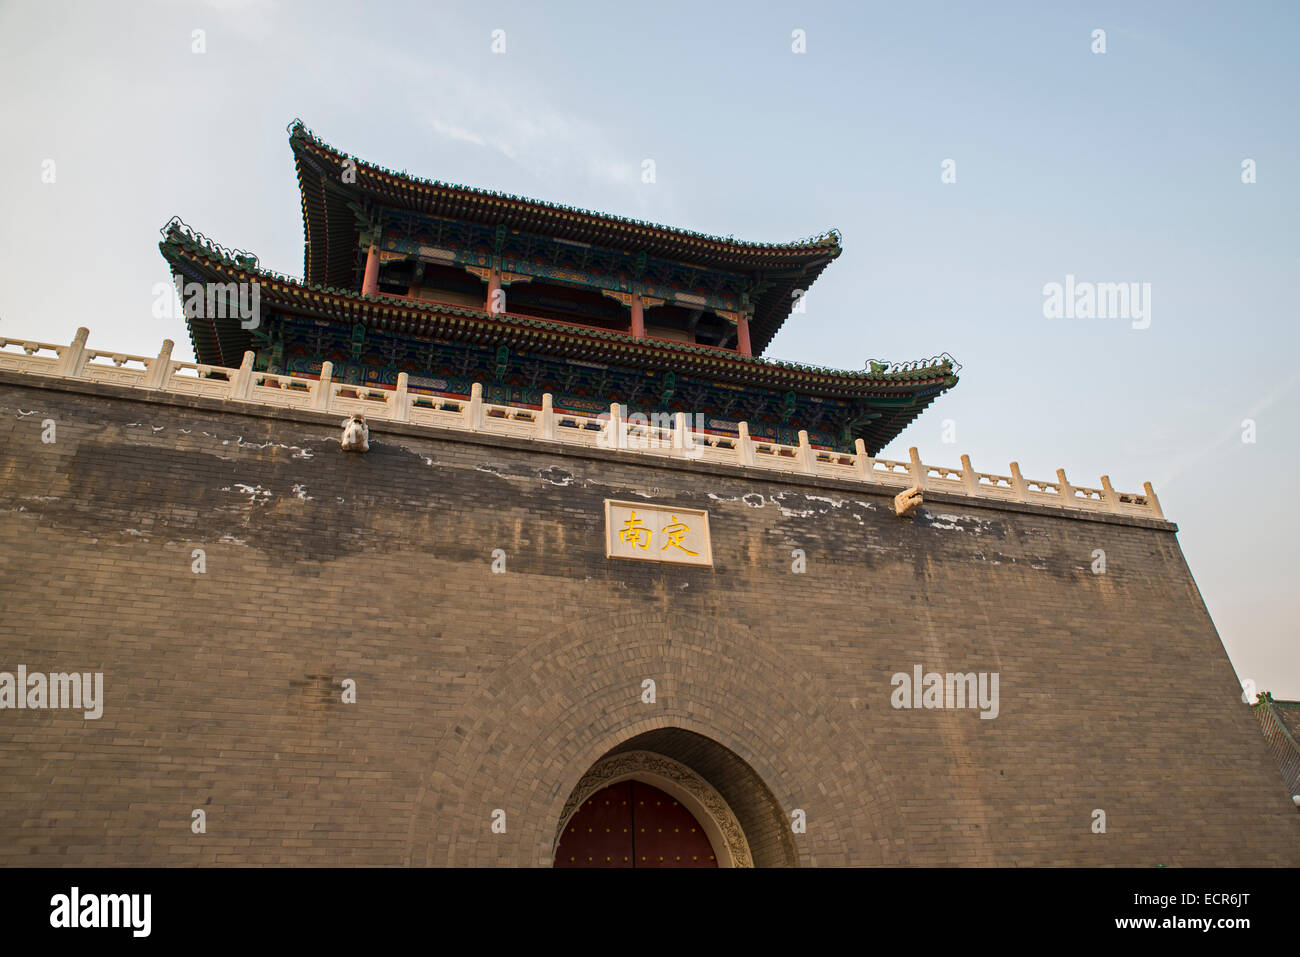 Drum Tower, Tianjin, China Stock Photo: 76727472 - Alamy